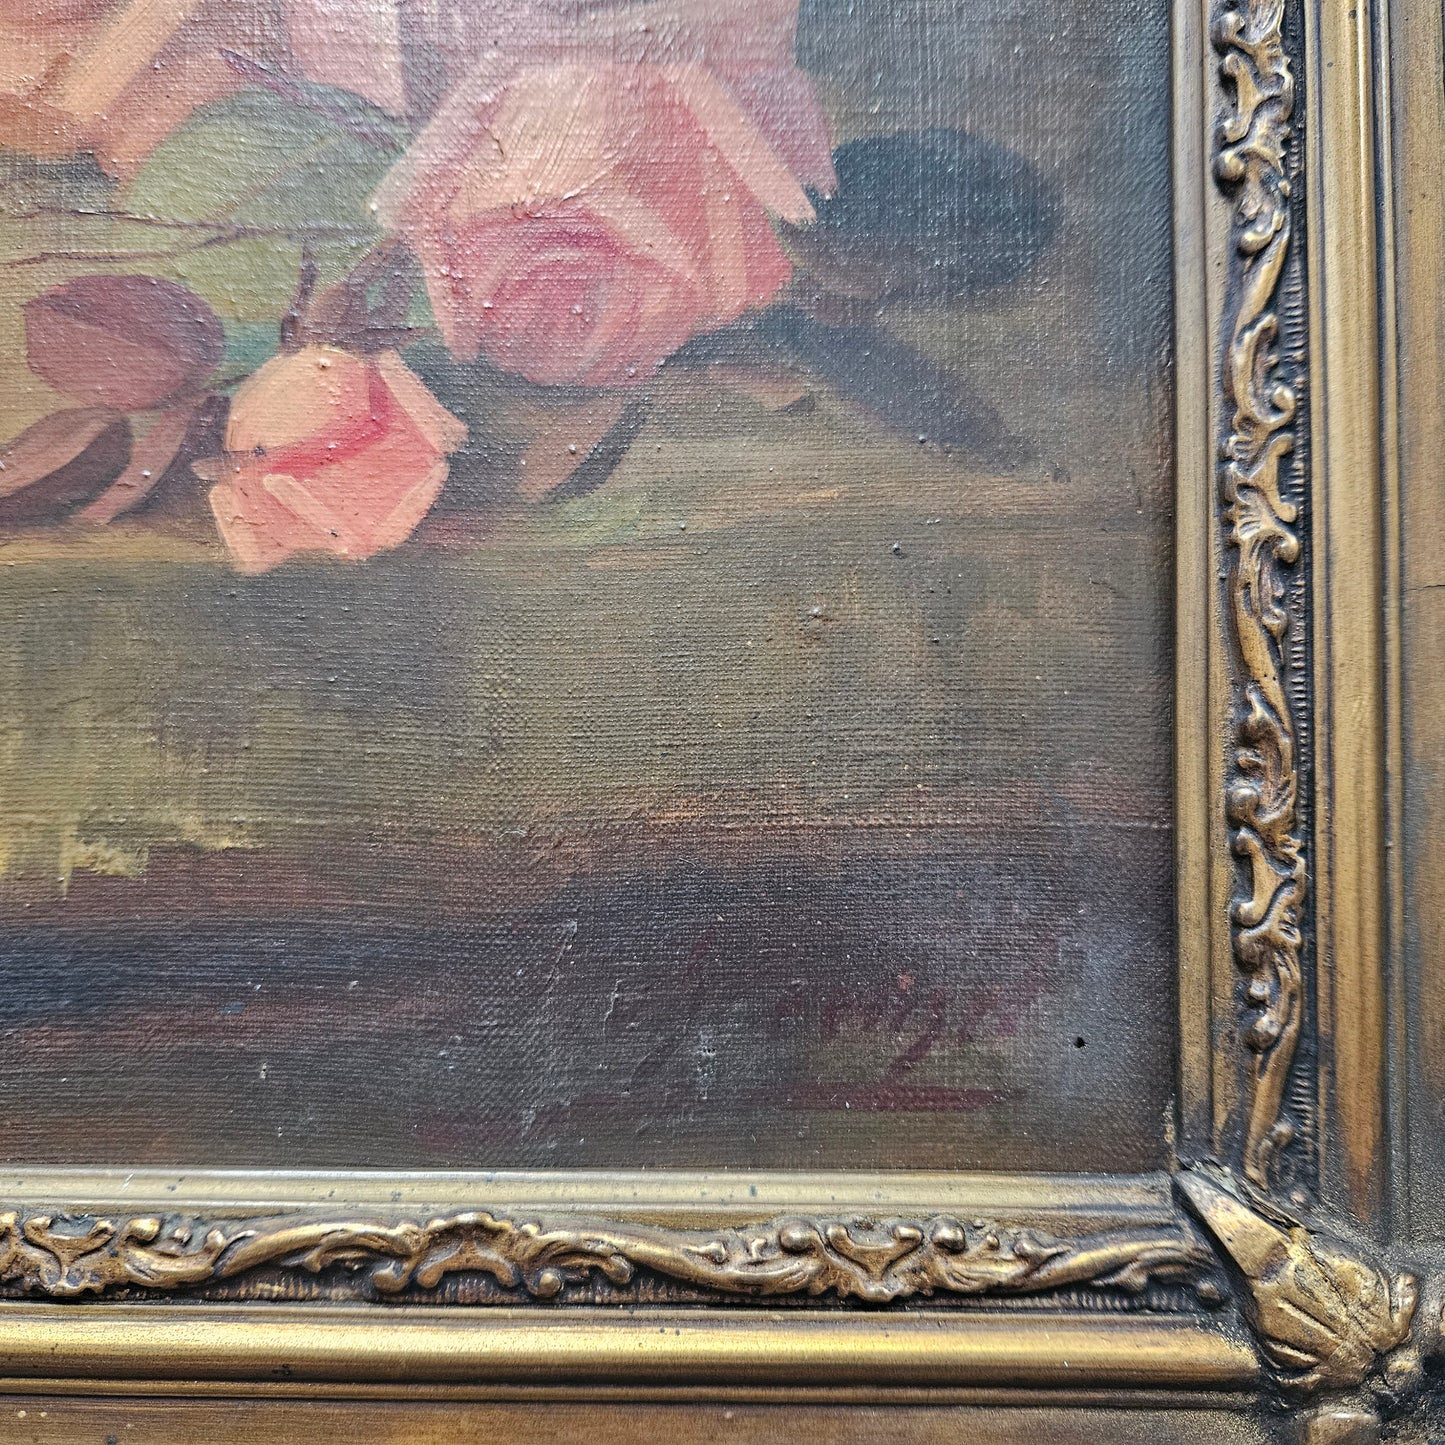 Gilt Framed Oil On Canvas Still Life Of Roses Painting